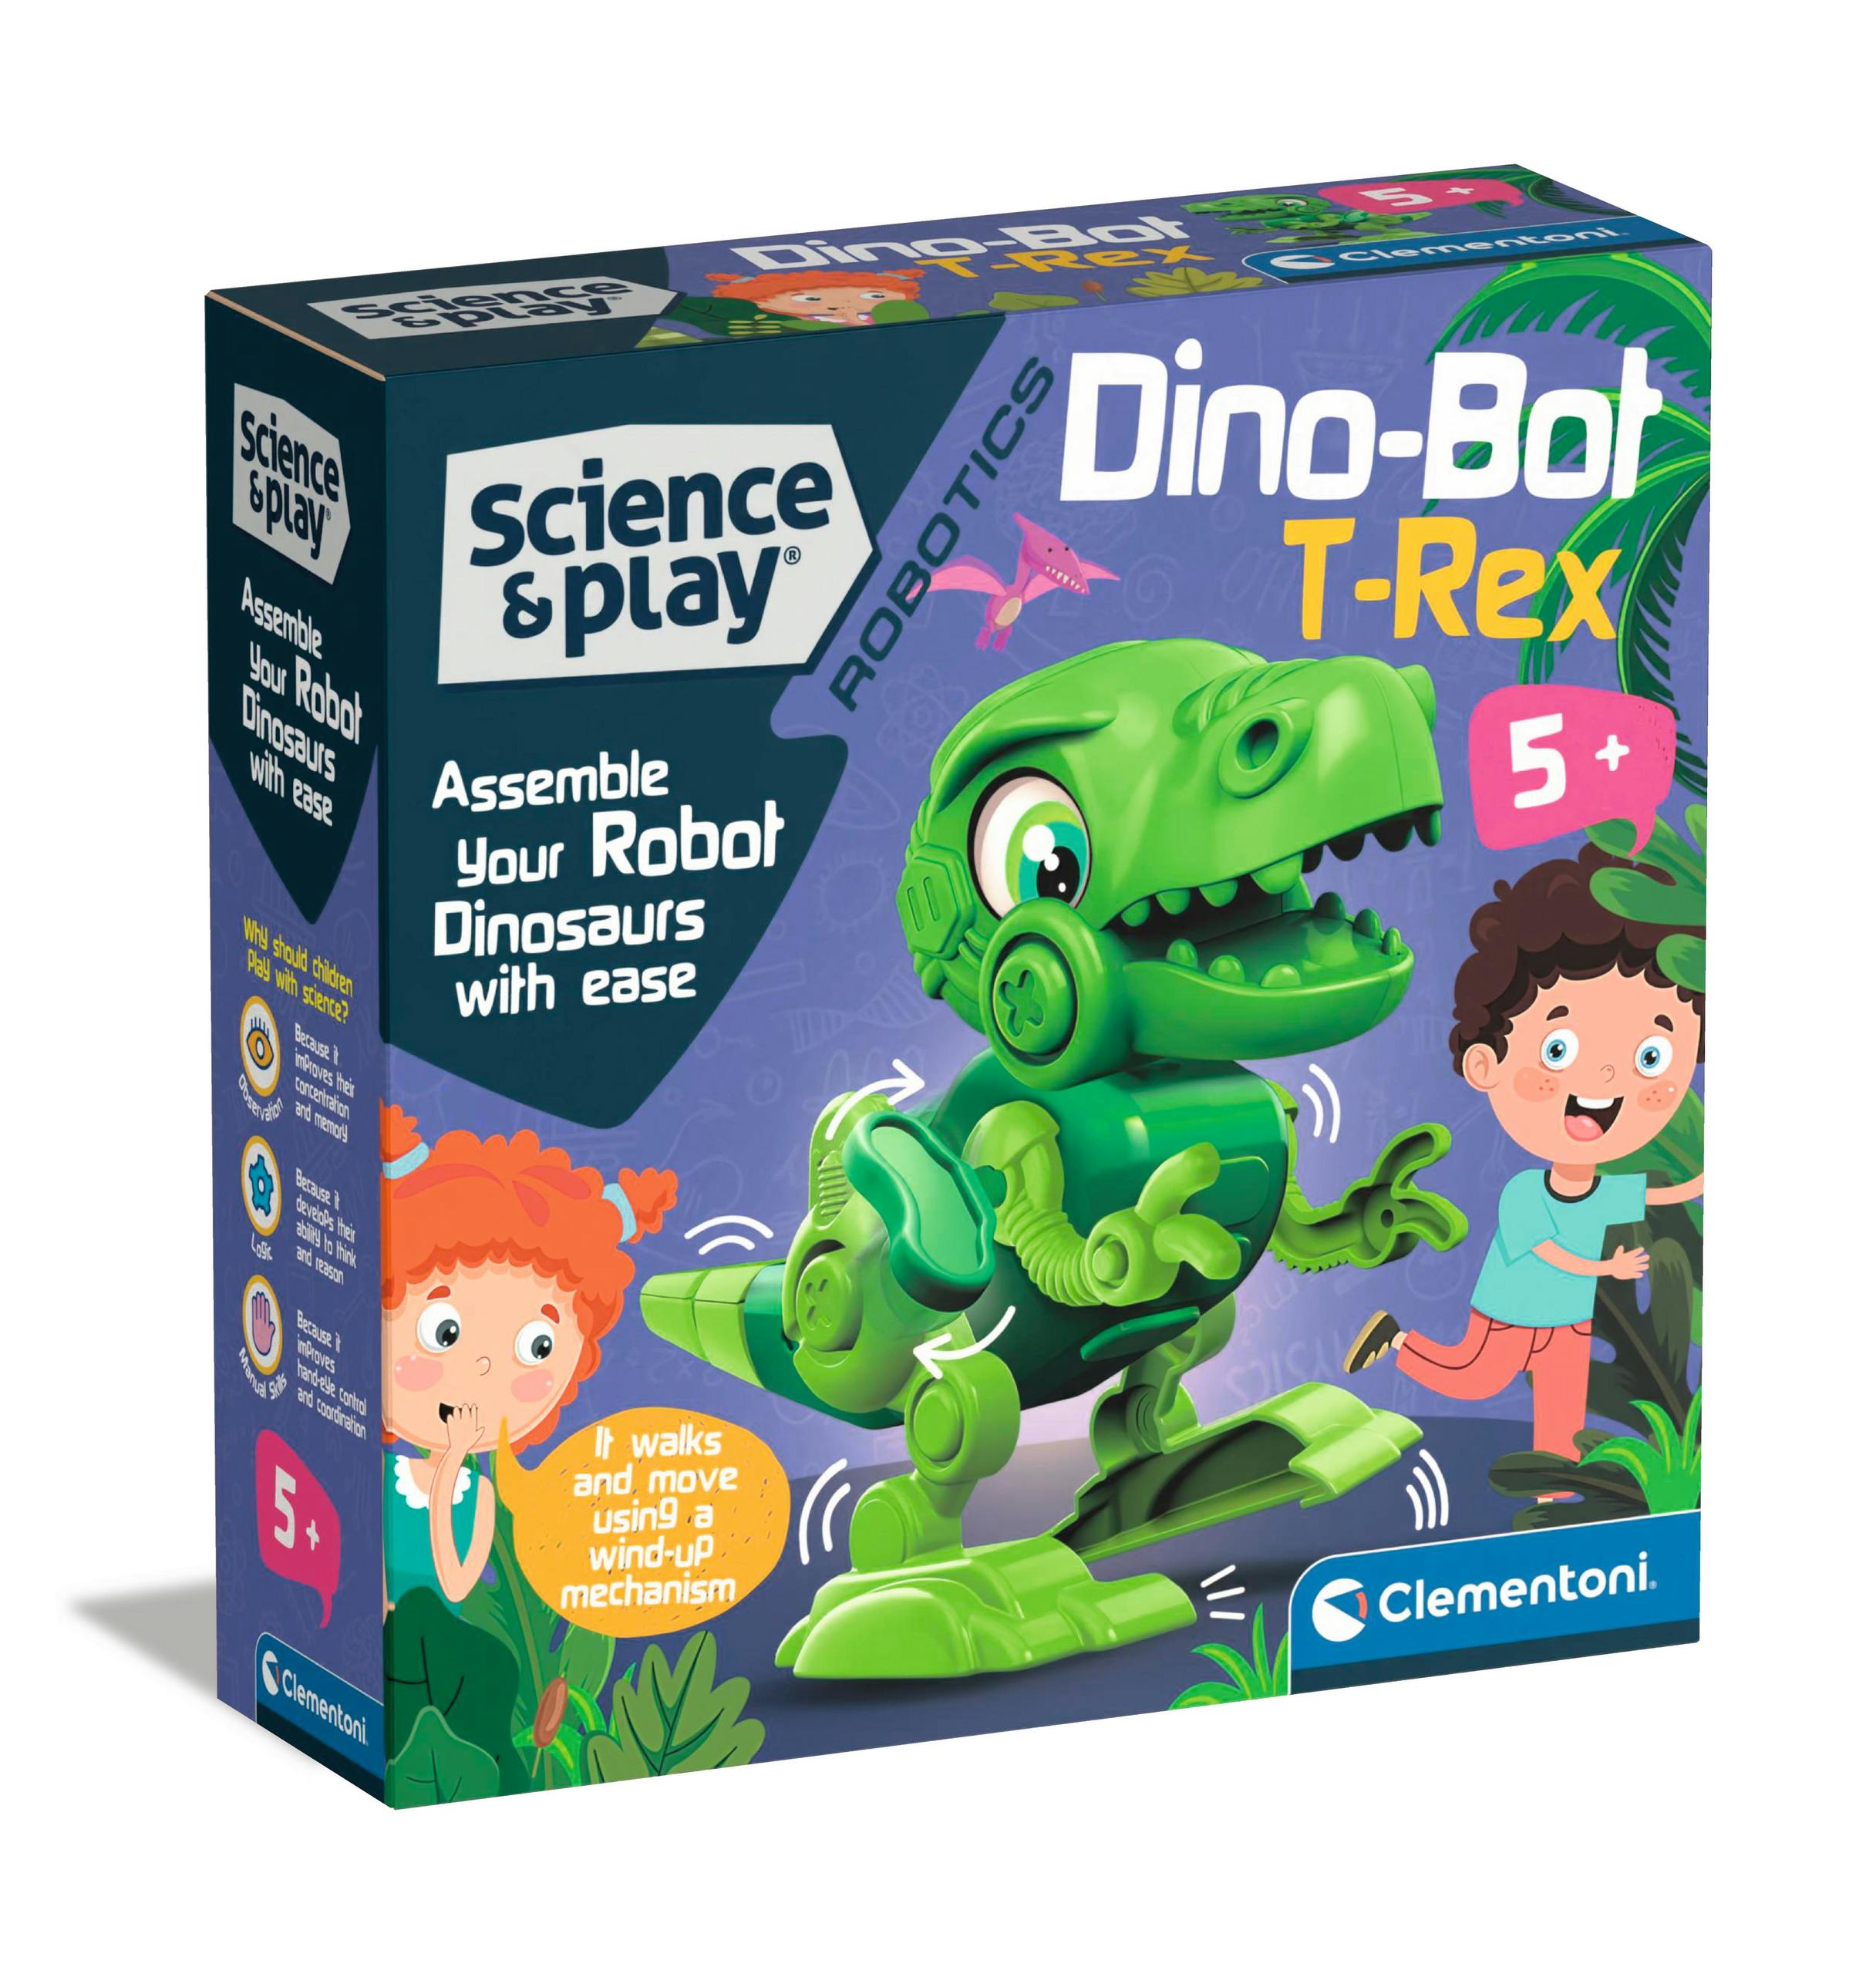 Clementoni Dino Bot T-rex